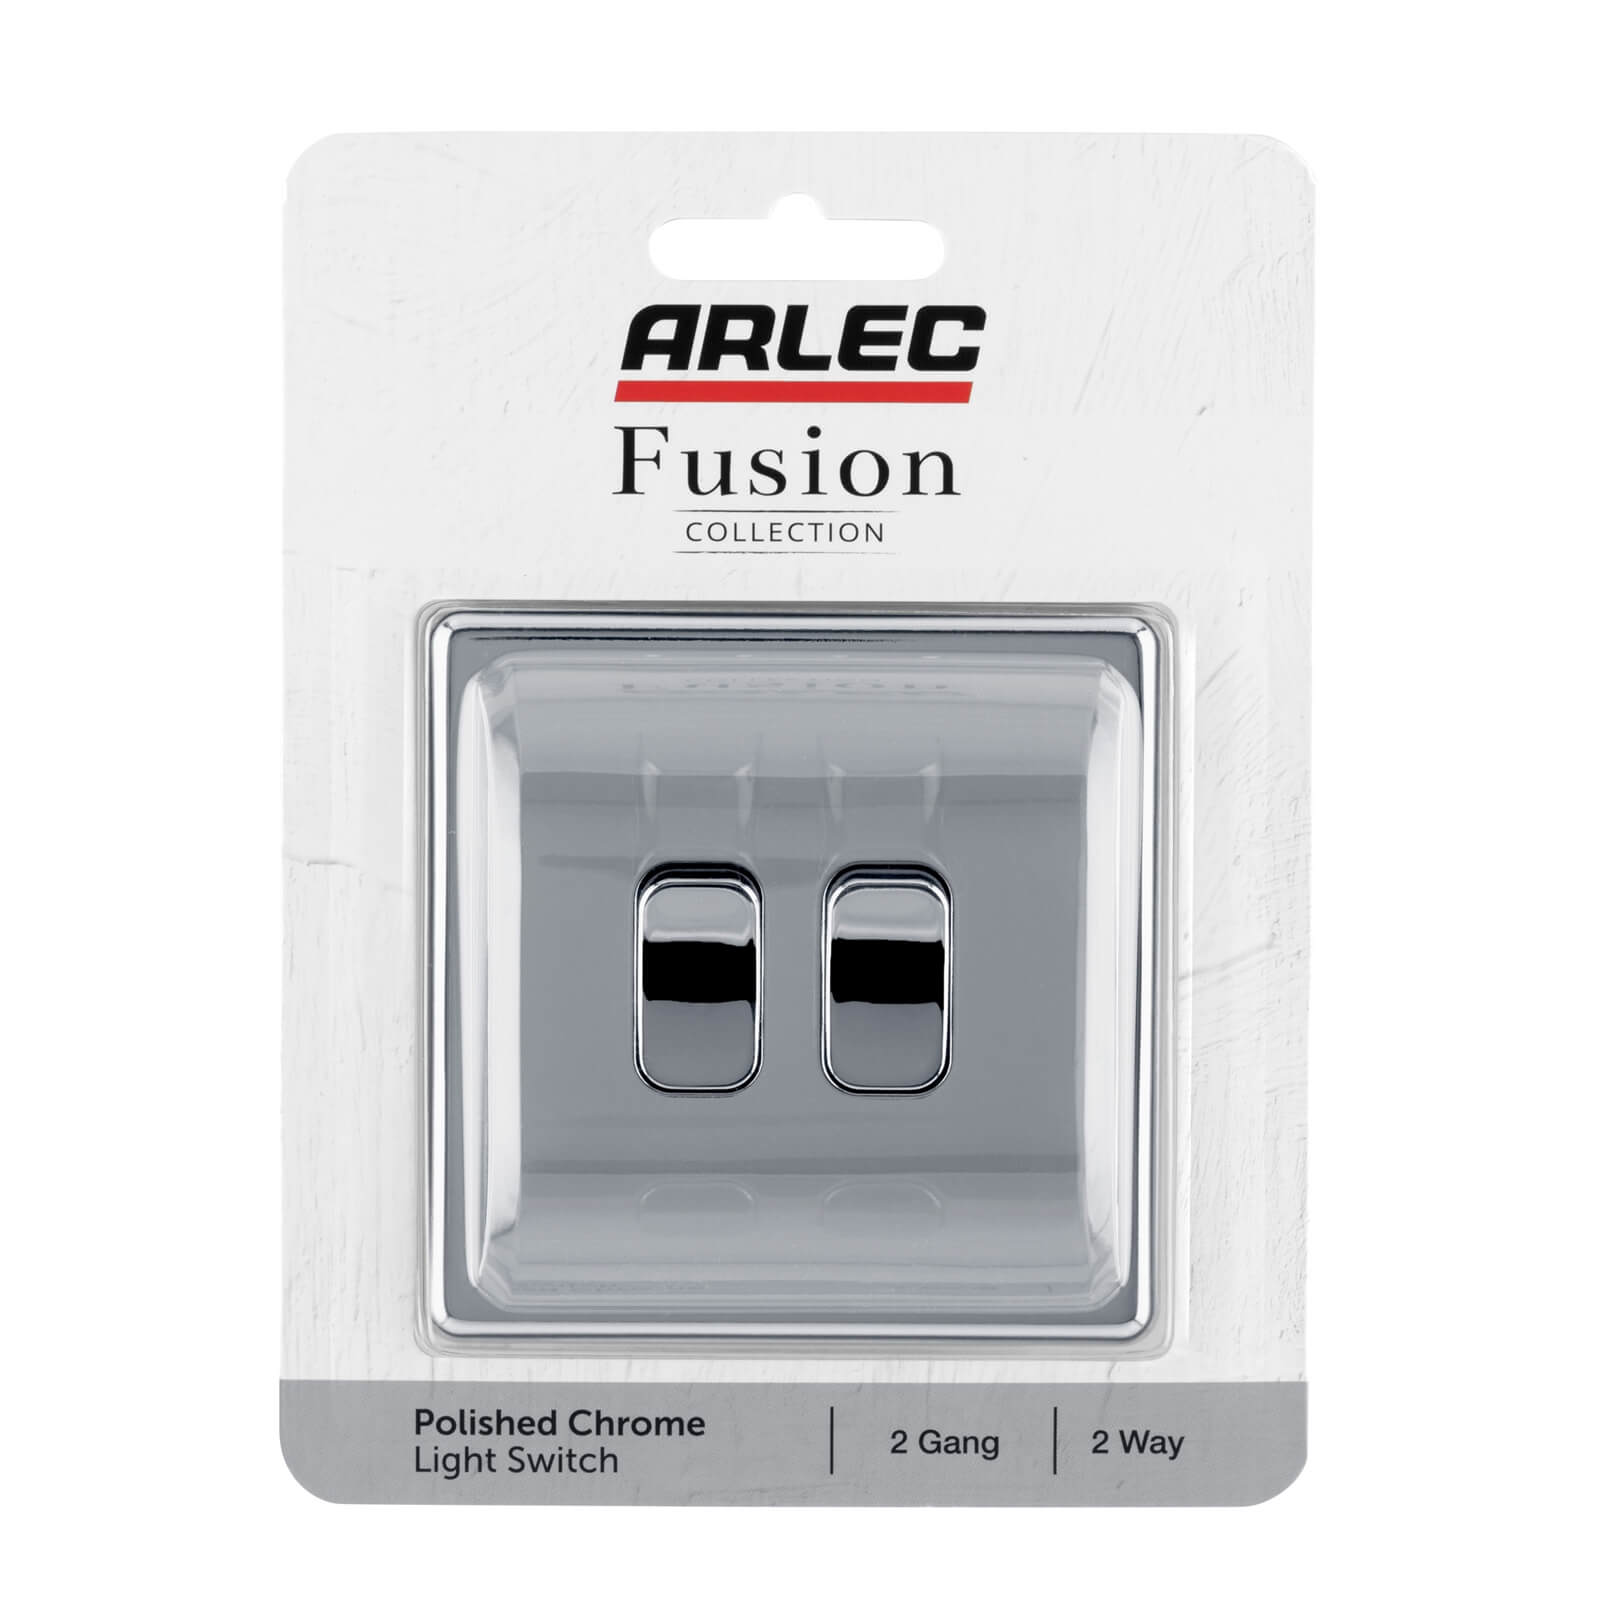 Arlec Fusion 10A 2Gang 2Way Polished Chrome Double light switch